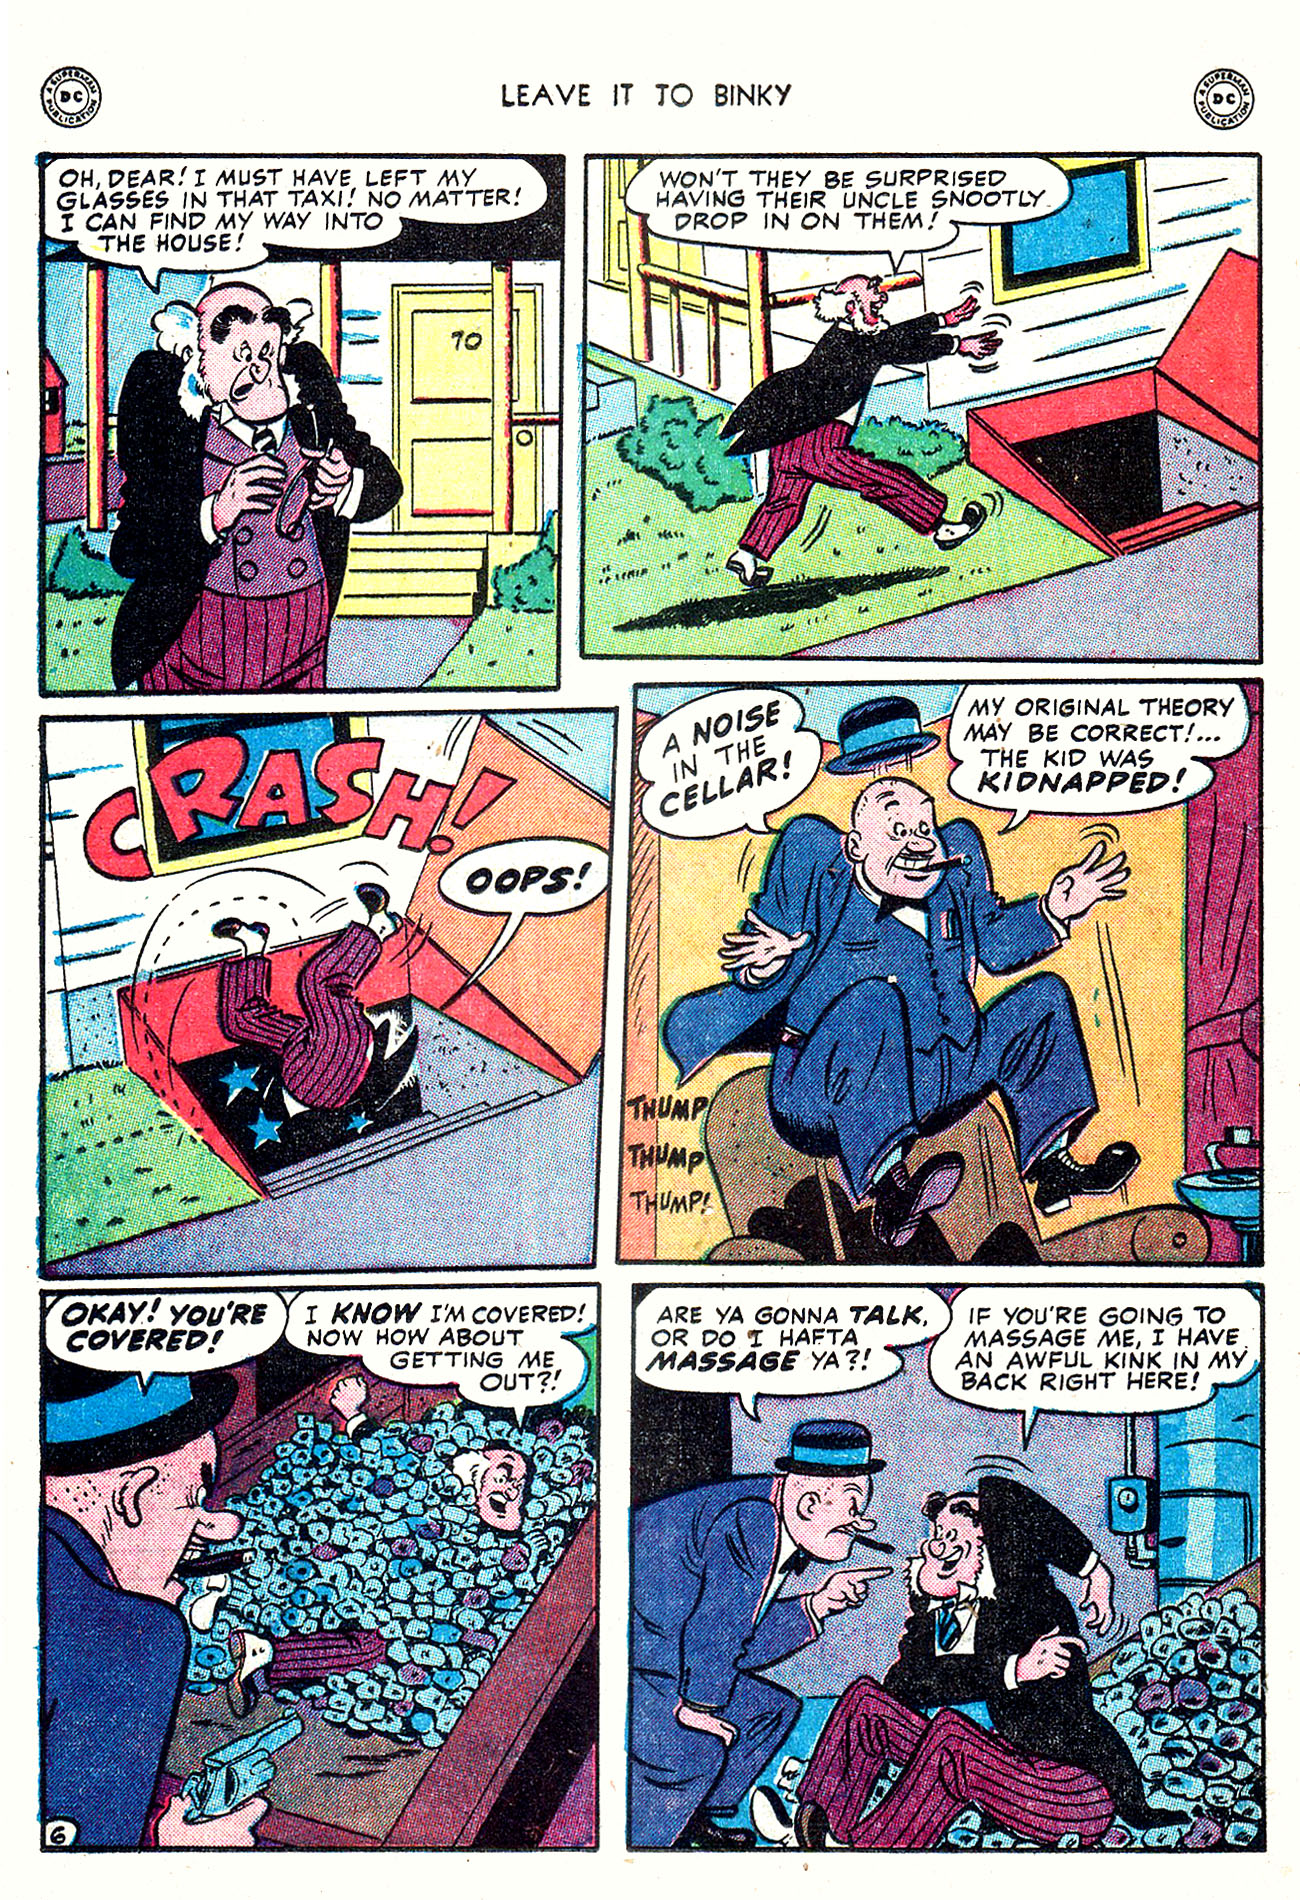 Read online Leave it to Binky comic -  Issue #6 - 24